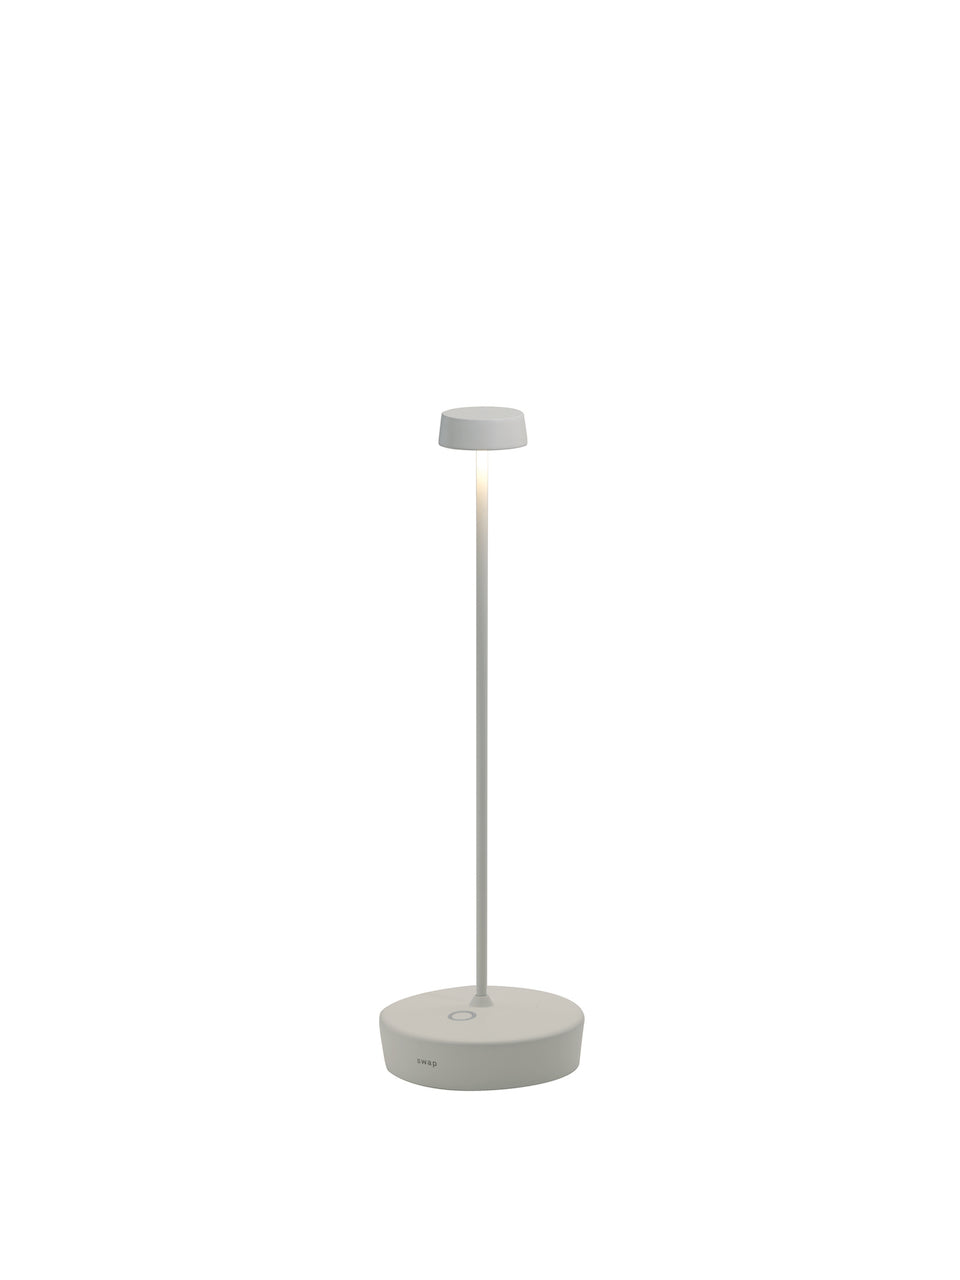 SWAP Portable Lamp